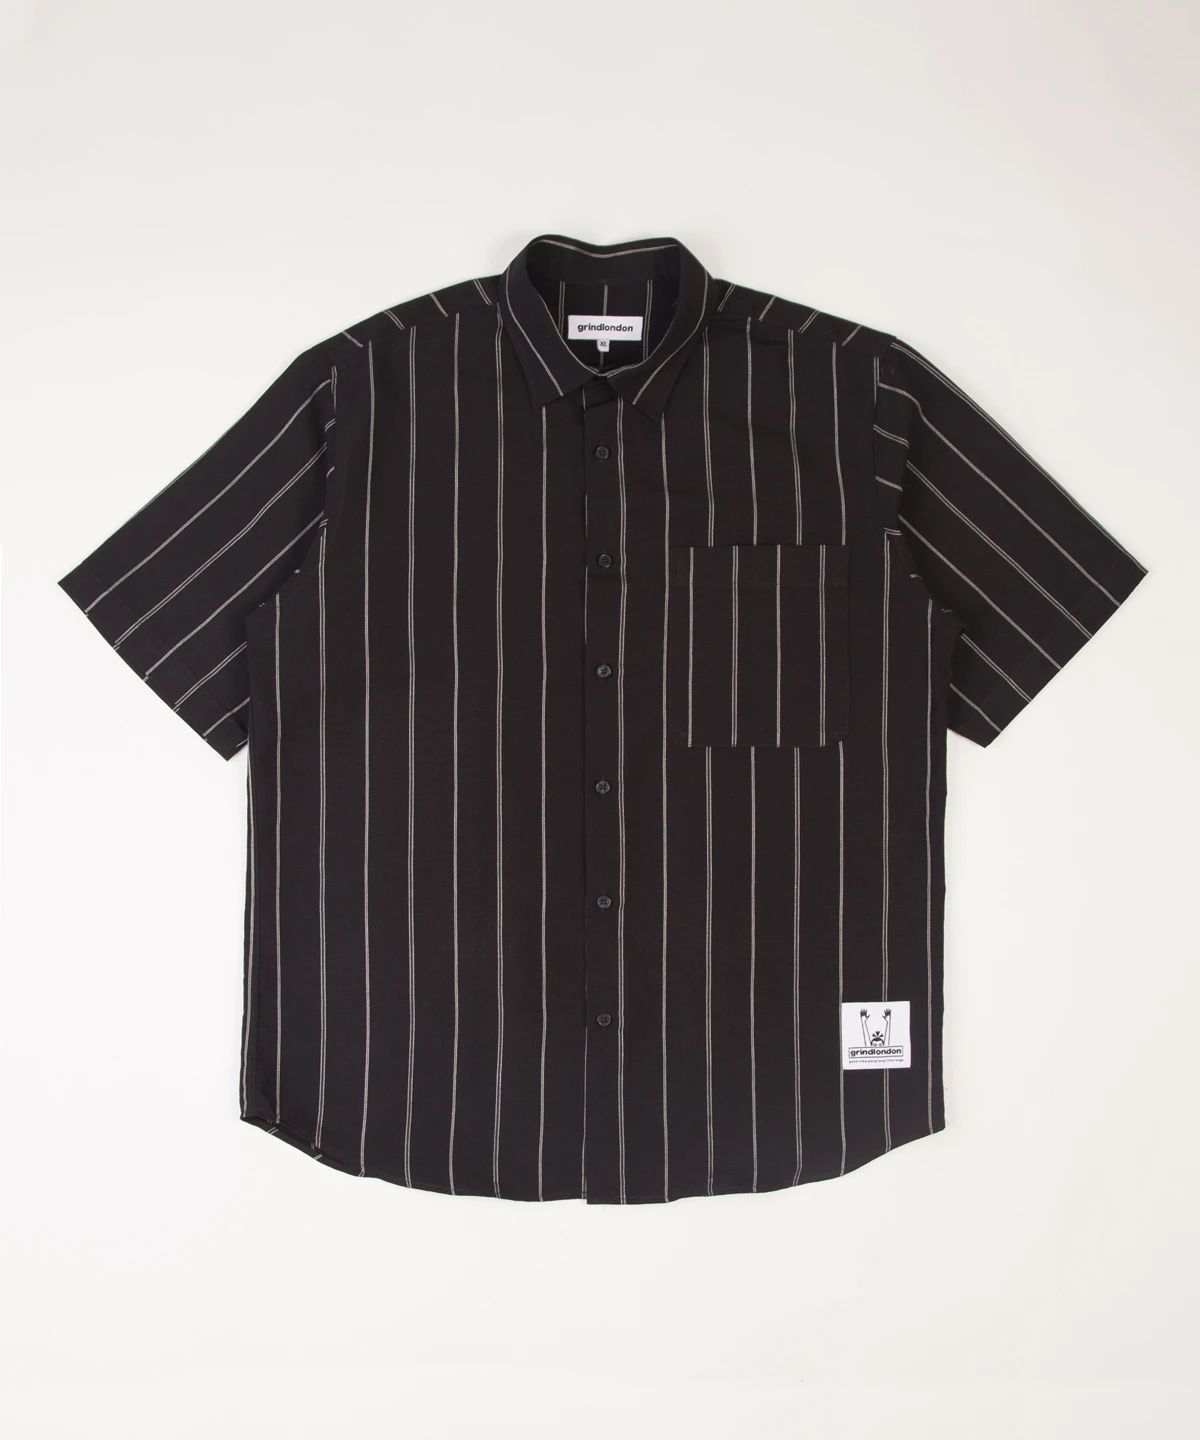 grindlondon viscose linen blend japanese deadstock fabric striped short sleeve shirt black.